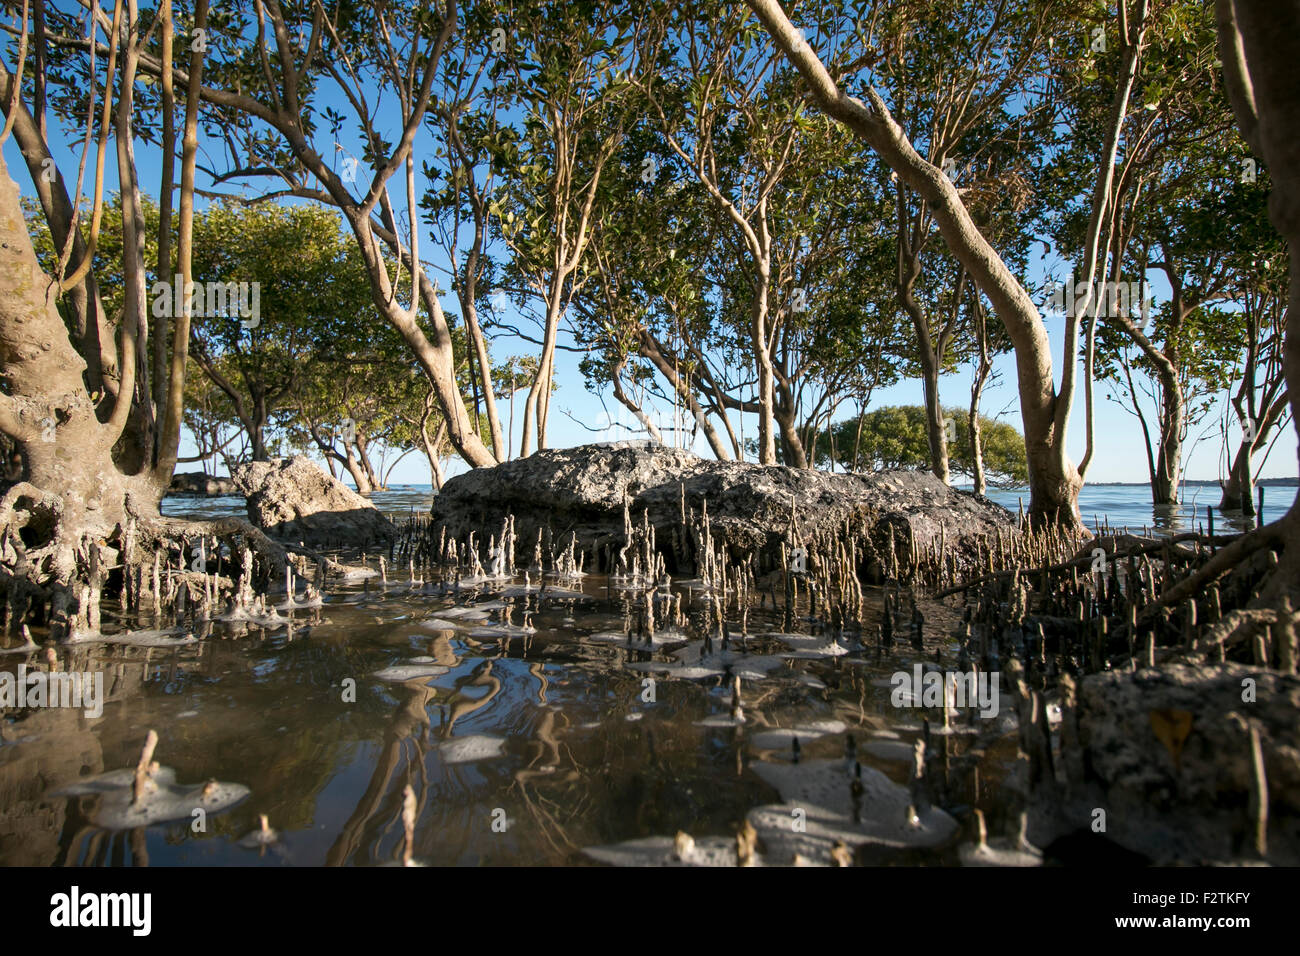 Marea in su le Mangrovie Foto Stock